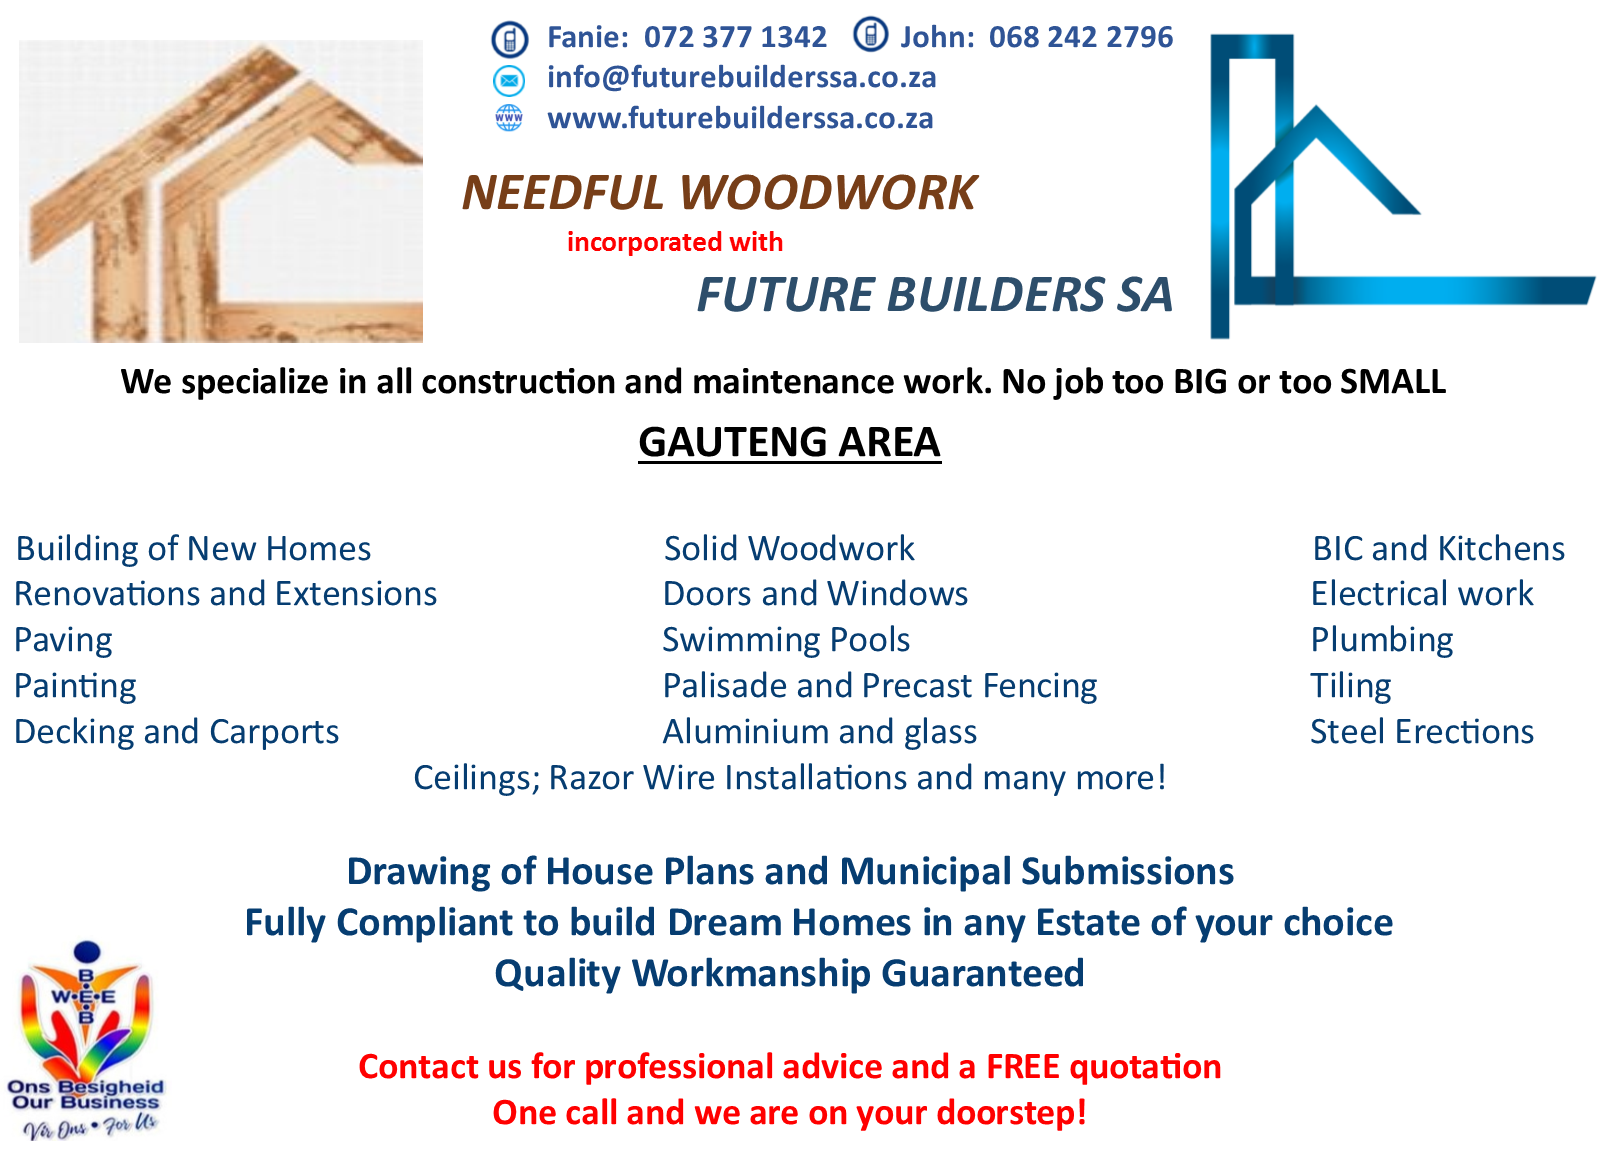 Needful Wood Work/Future Builders SA